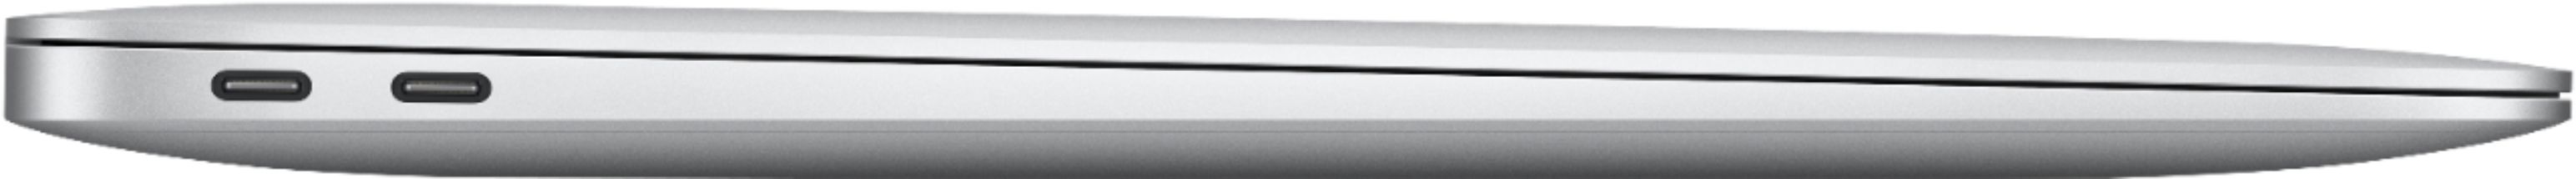 Geek Squad Certified Refurbished MacBook Pro 13.3 Laptop Apple M1